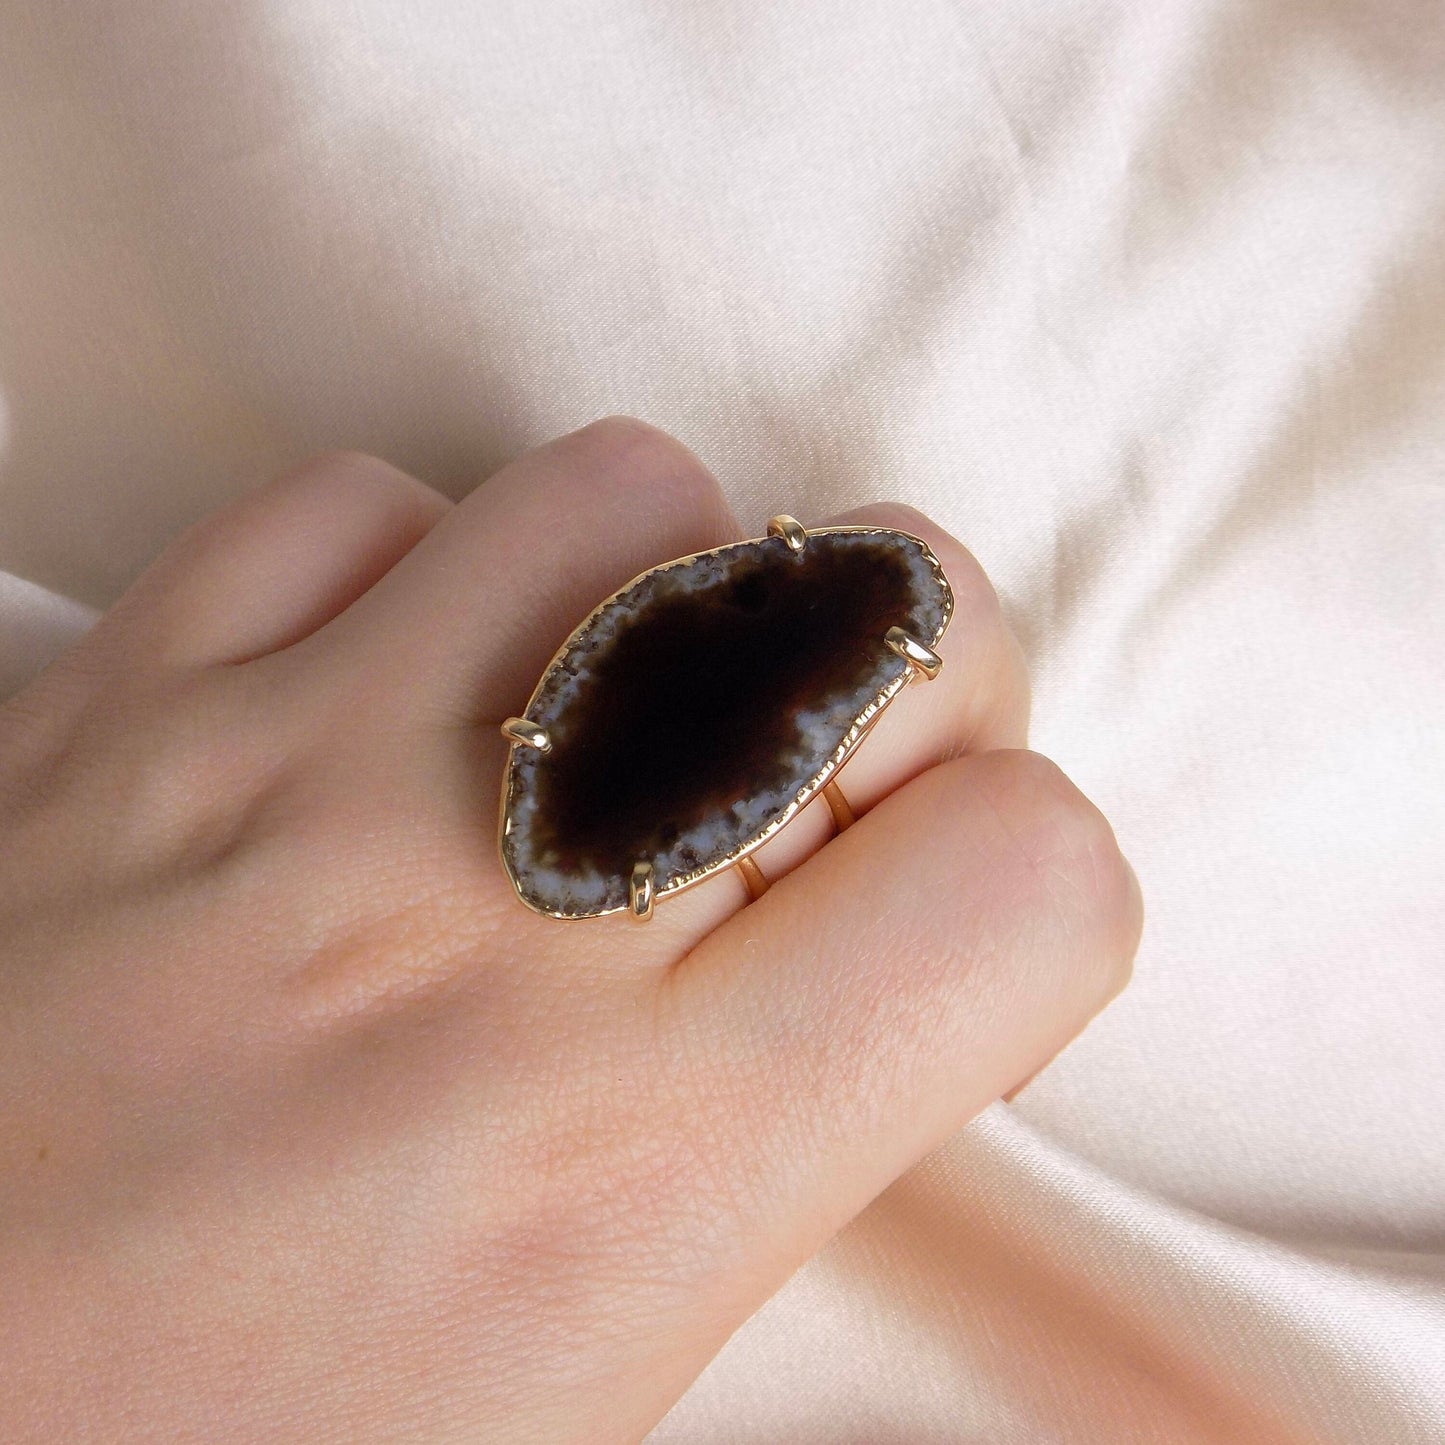 Boho Agate Ring Black, Natural Geode Ring Adjustable, Large Crystal Ring, Gift Women, G15-84